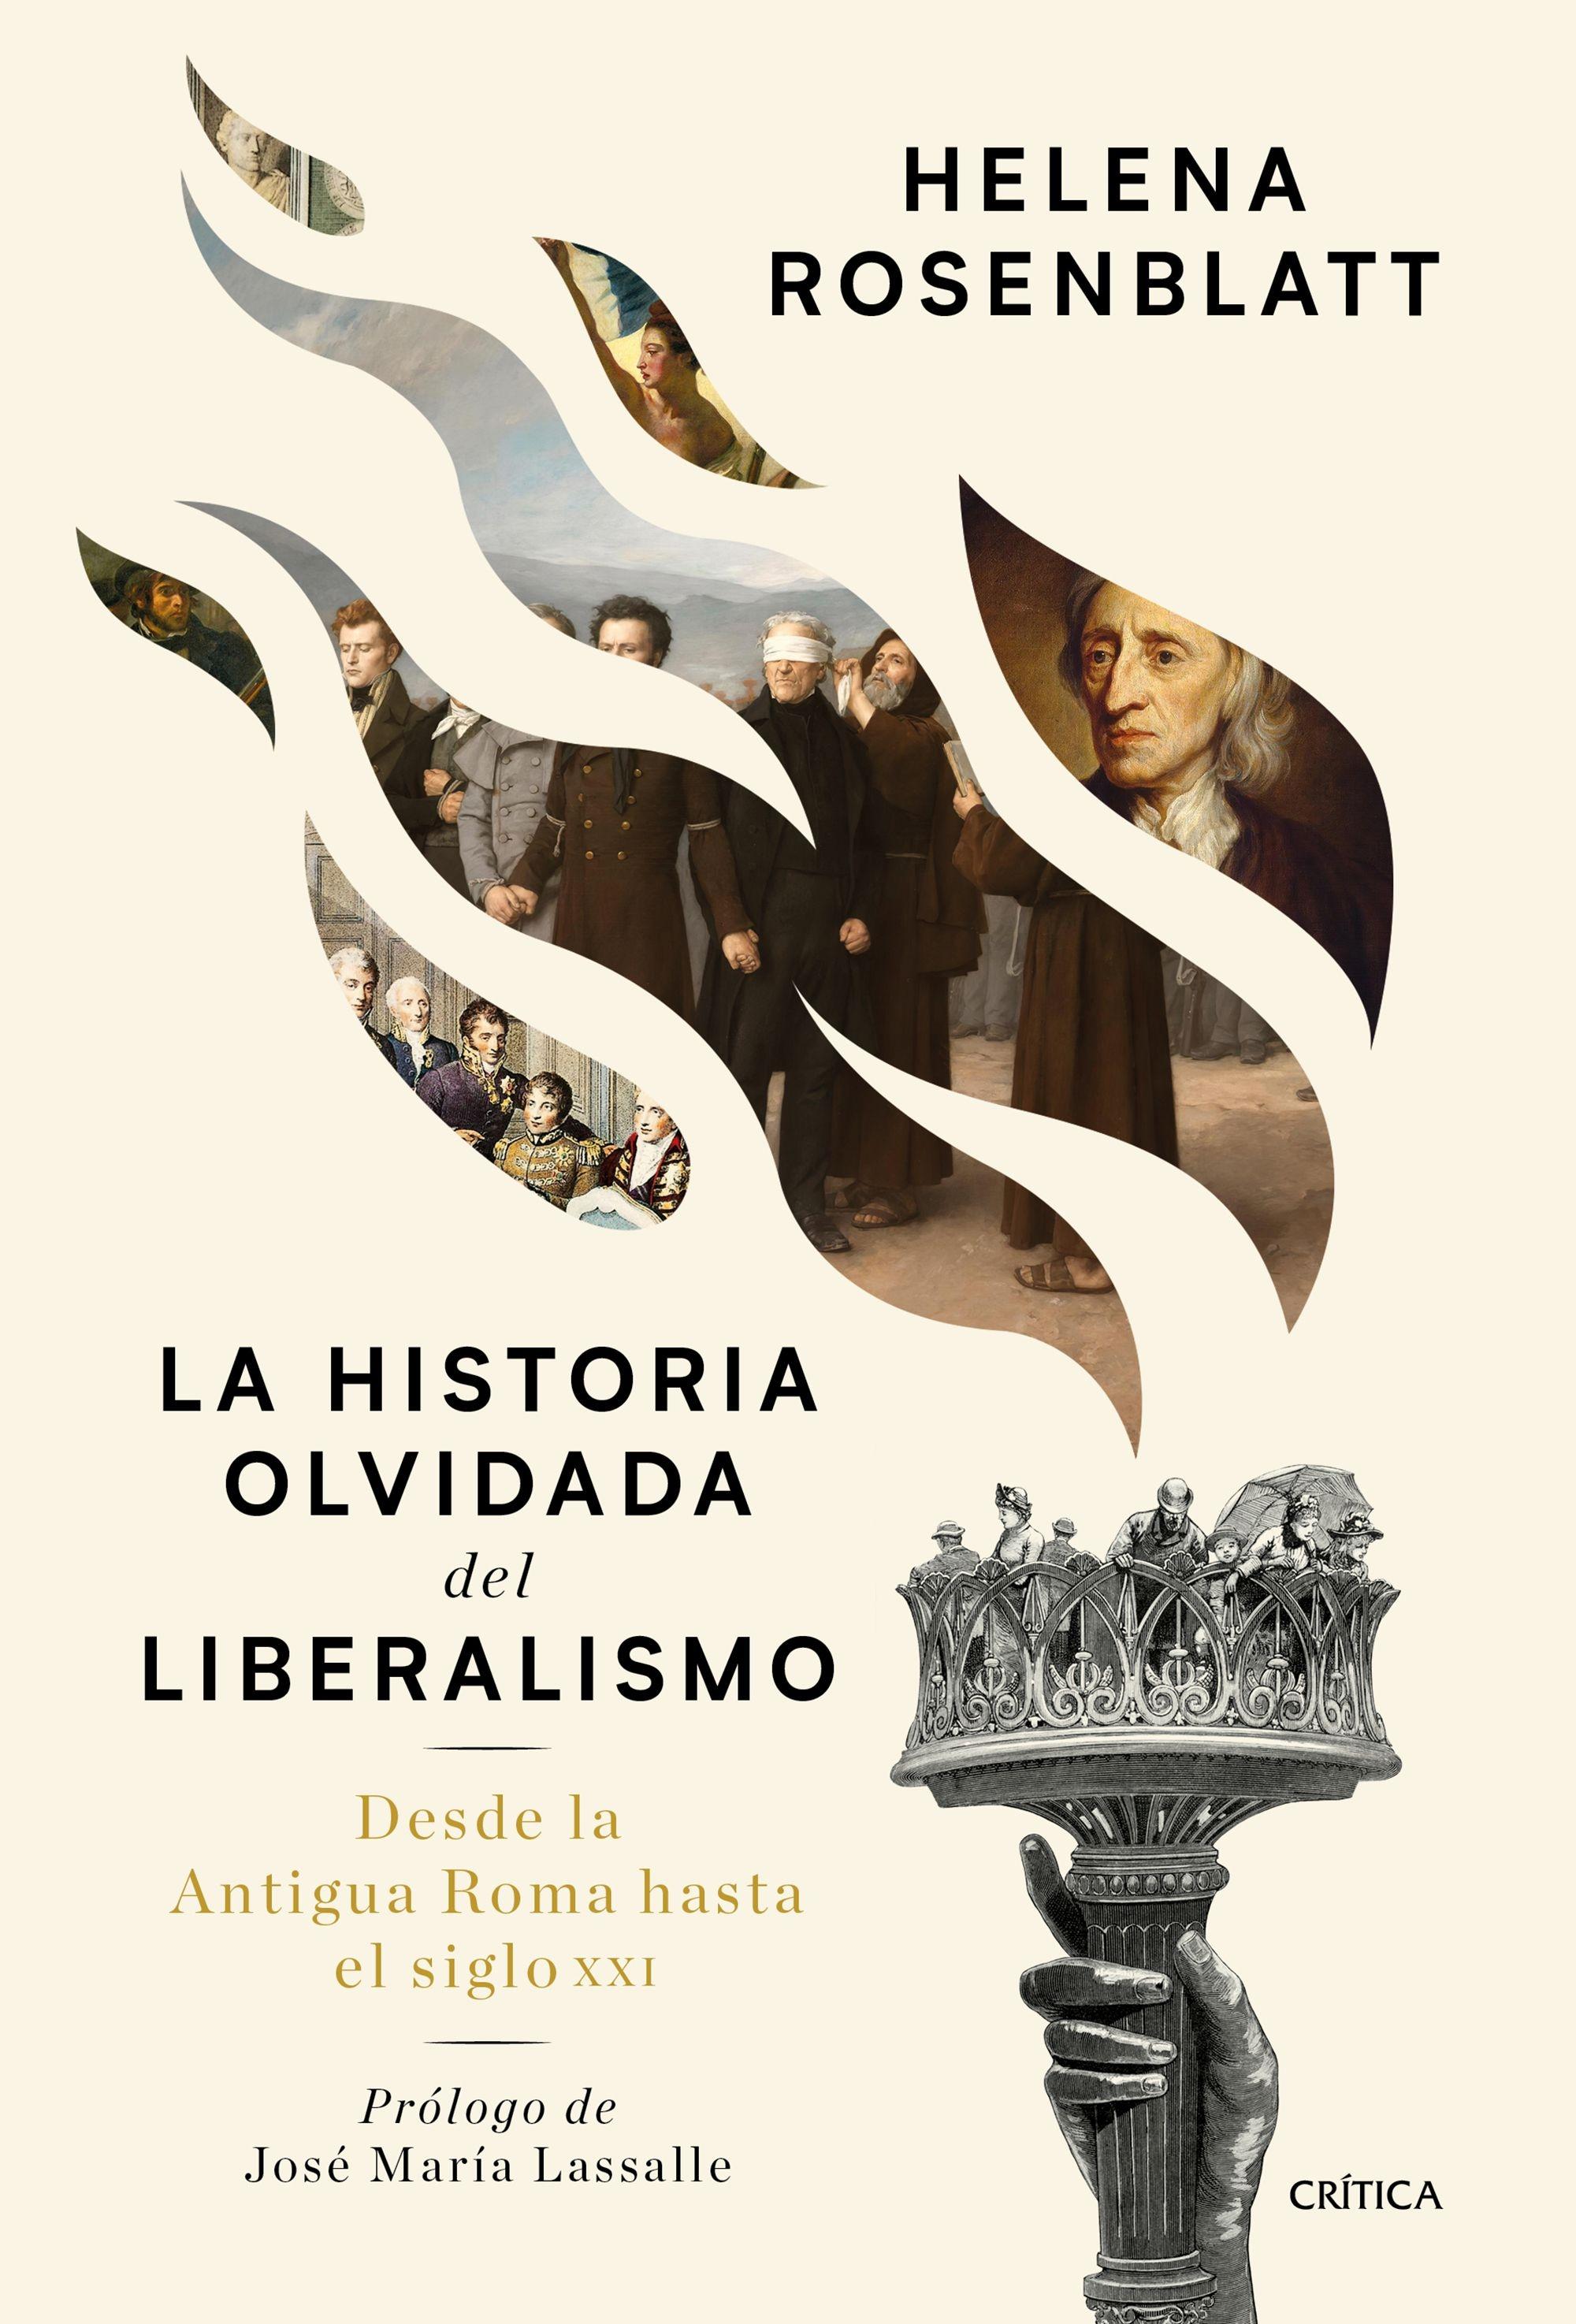 La Historia Olvidada del Liberalismo "Desde la Antigua Roma hasta el Siglo Xxi"